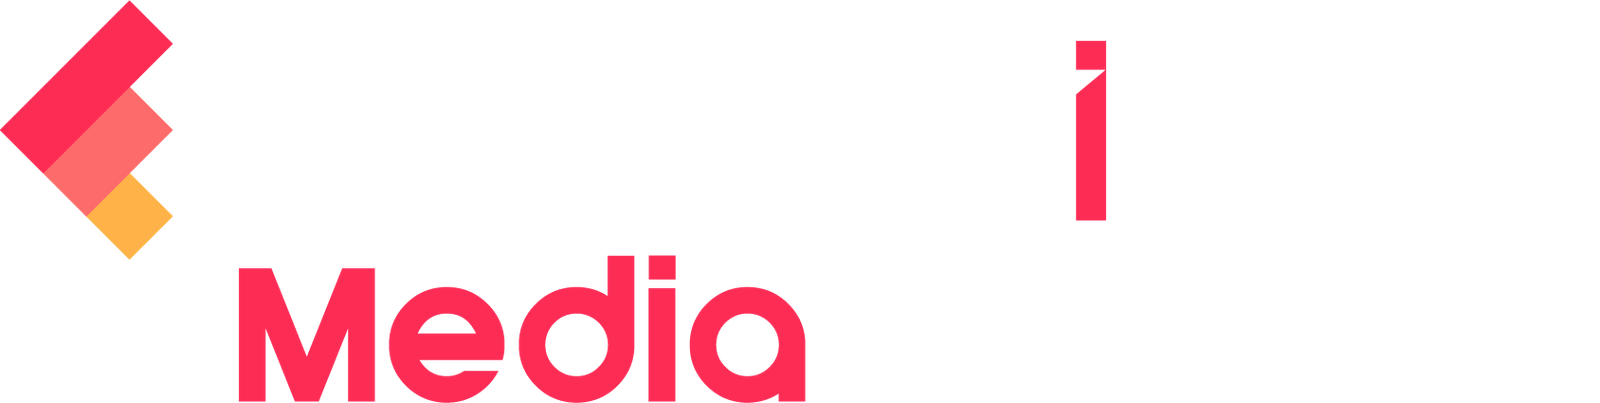 Futurists Media White Logo